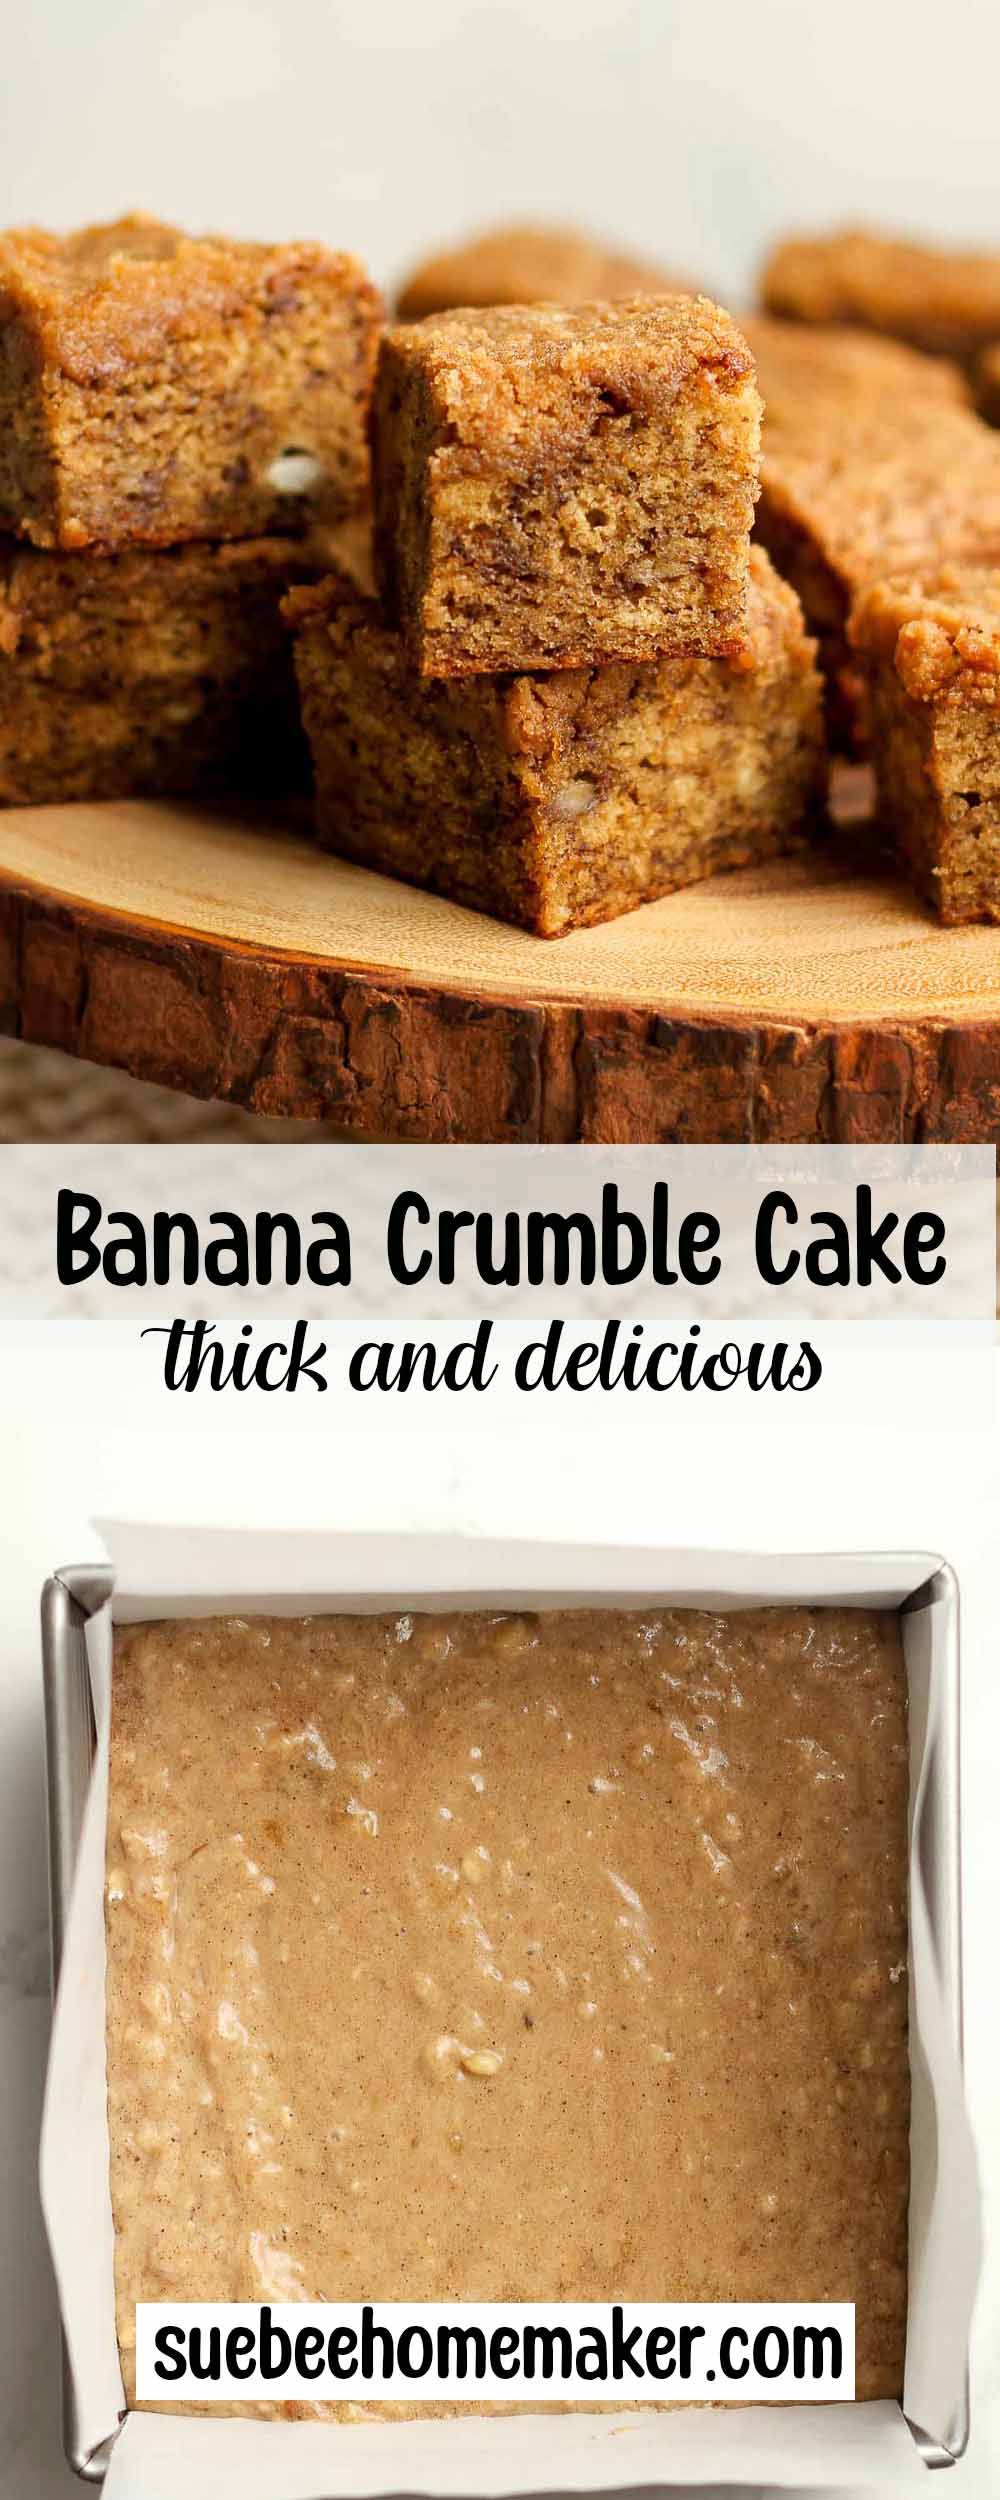 A collage of photos for Banana Crumble Cake.